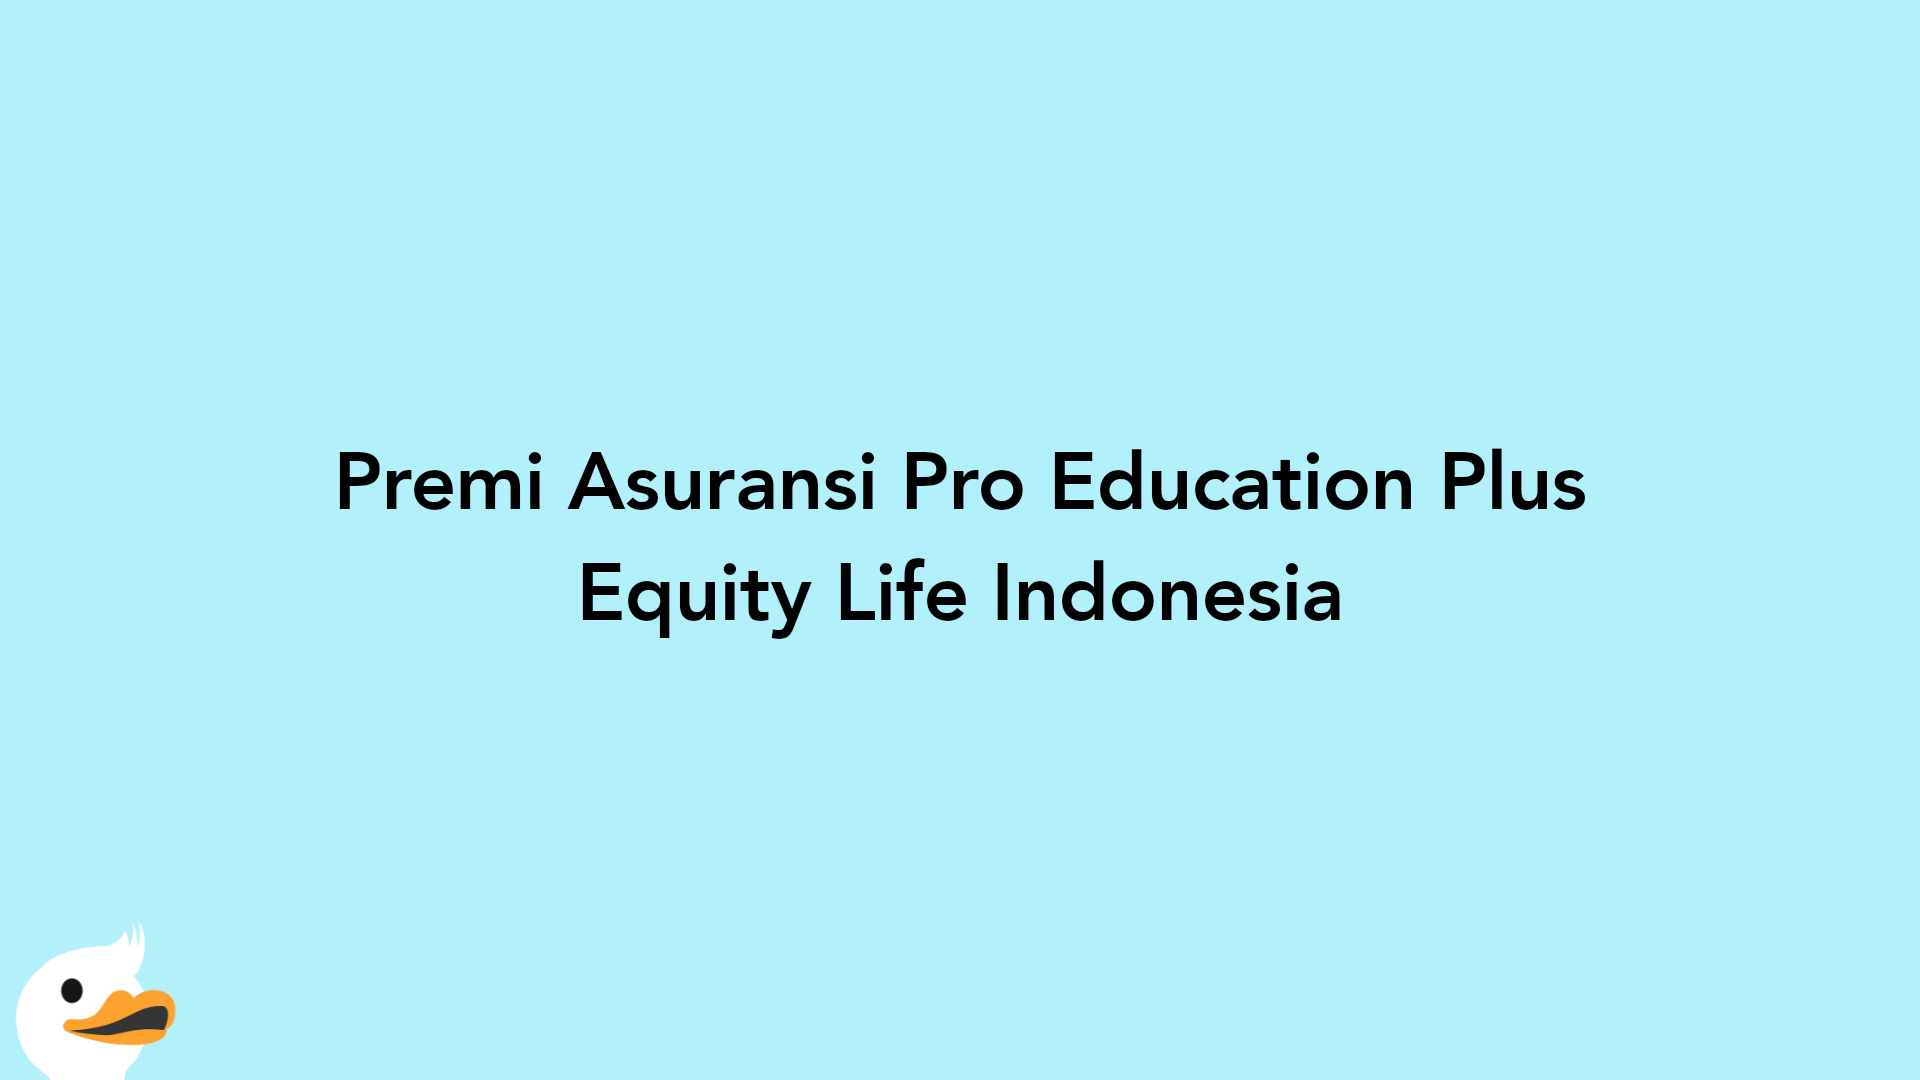 Premi Asuransi Pro Education Plus Equity Life Indonesia